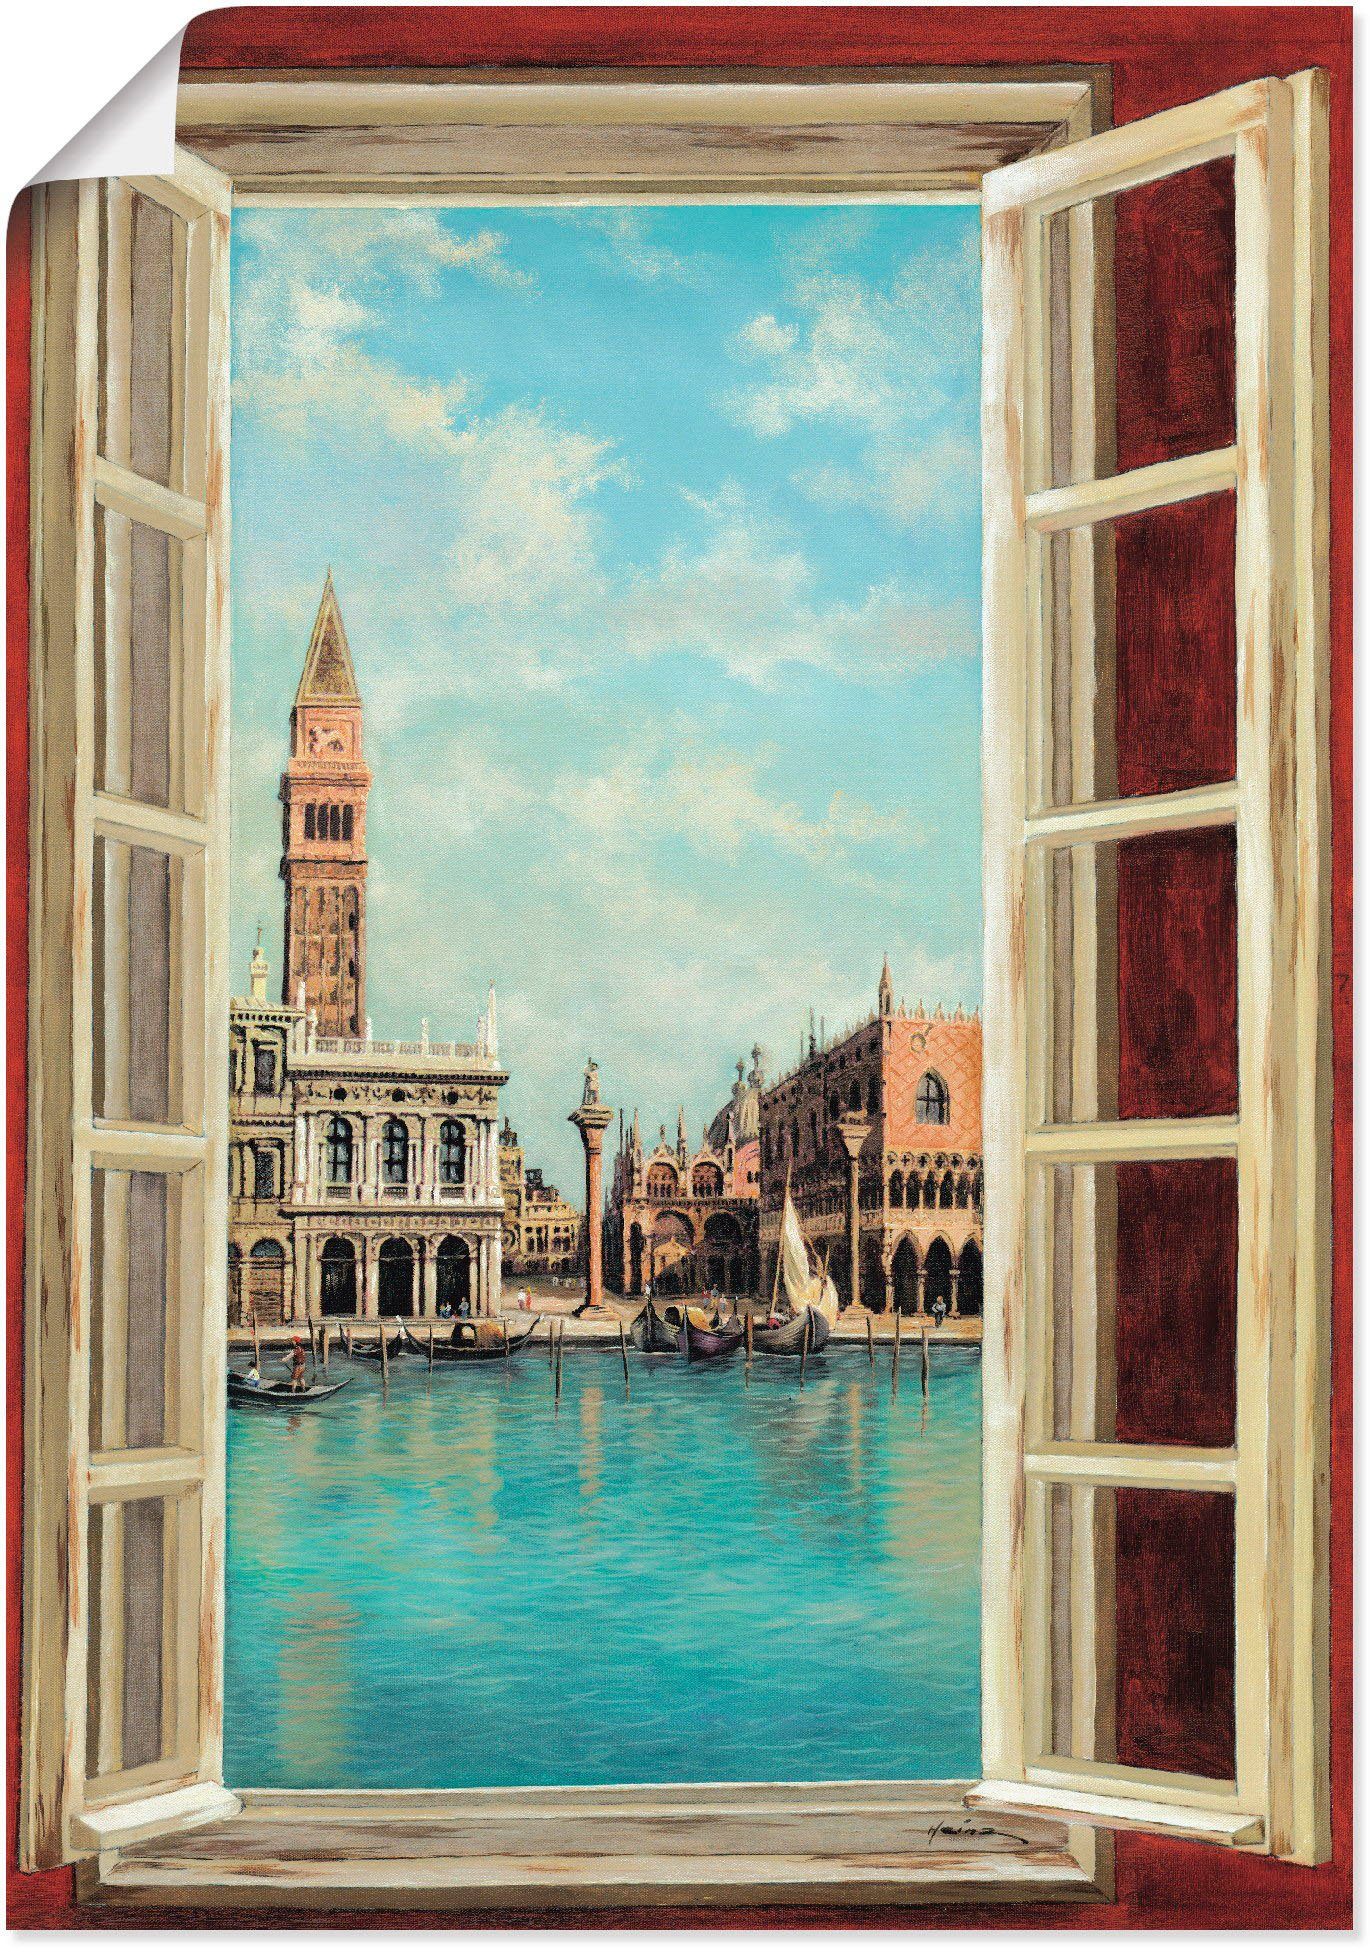 Leinwandbild, Artland Wandbild mit St), versch. Fensterblick Größen oder Poster auf als Blick in Alubild, Wandaufkleber Venedig, Fenster (1